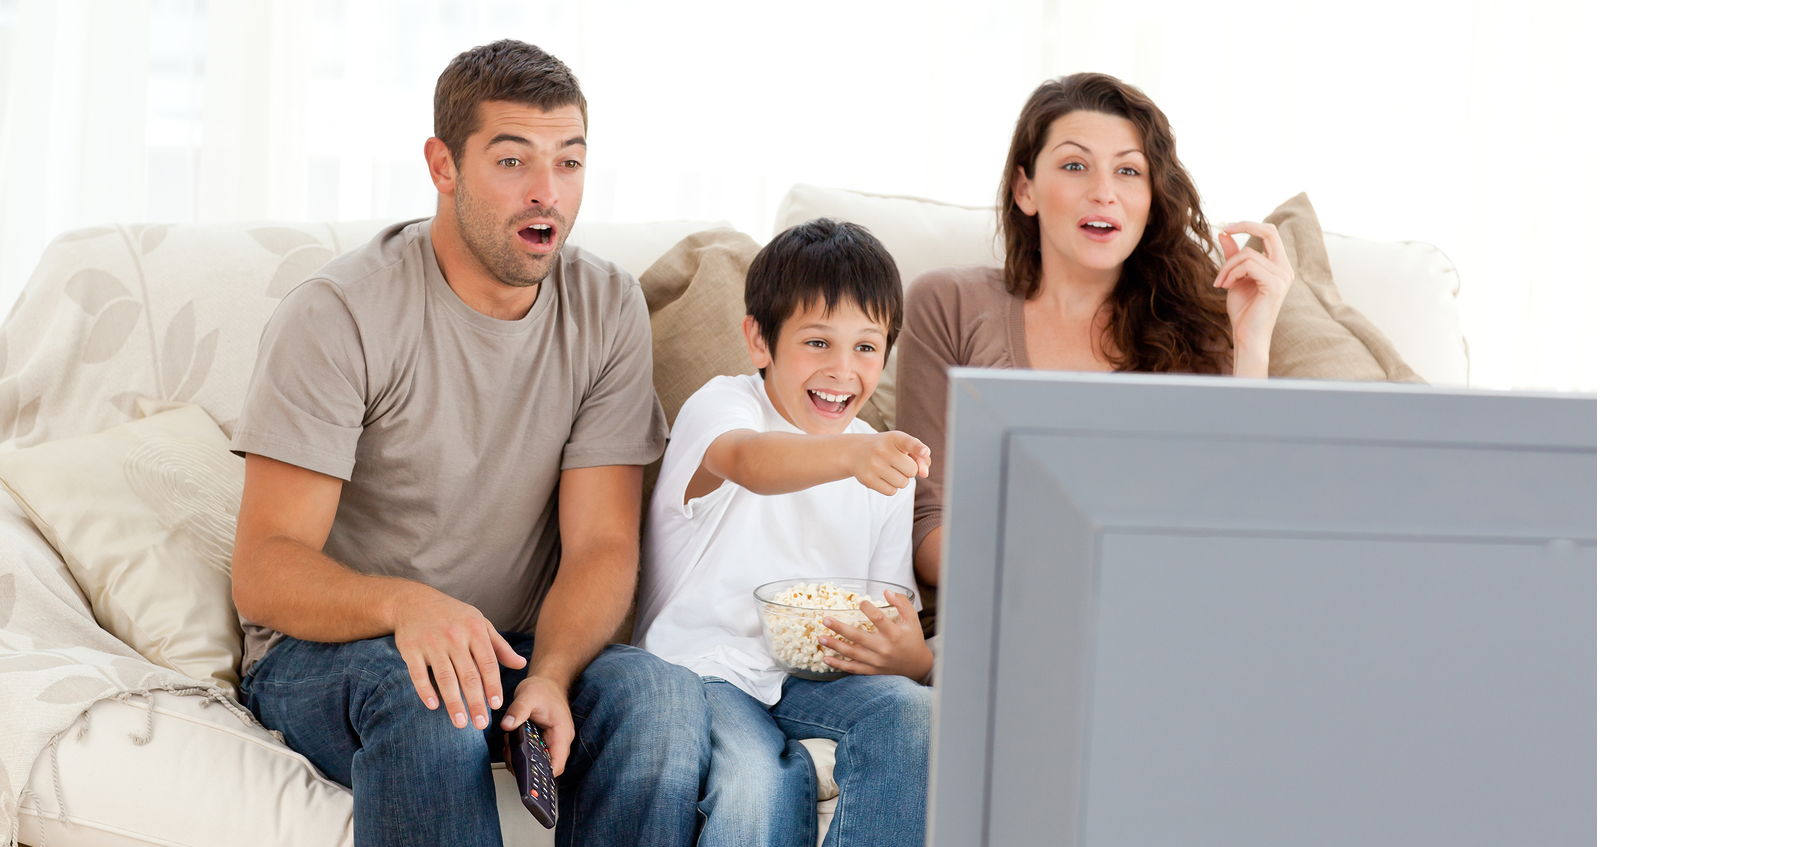 Пока родители смотрят телевизор. Семья у телевизора. Семья на диване перед телевизором. Семья смотрит телевизор. Счастливая семья у телевизора.